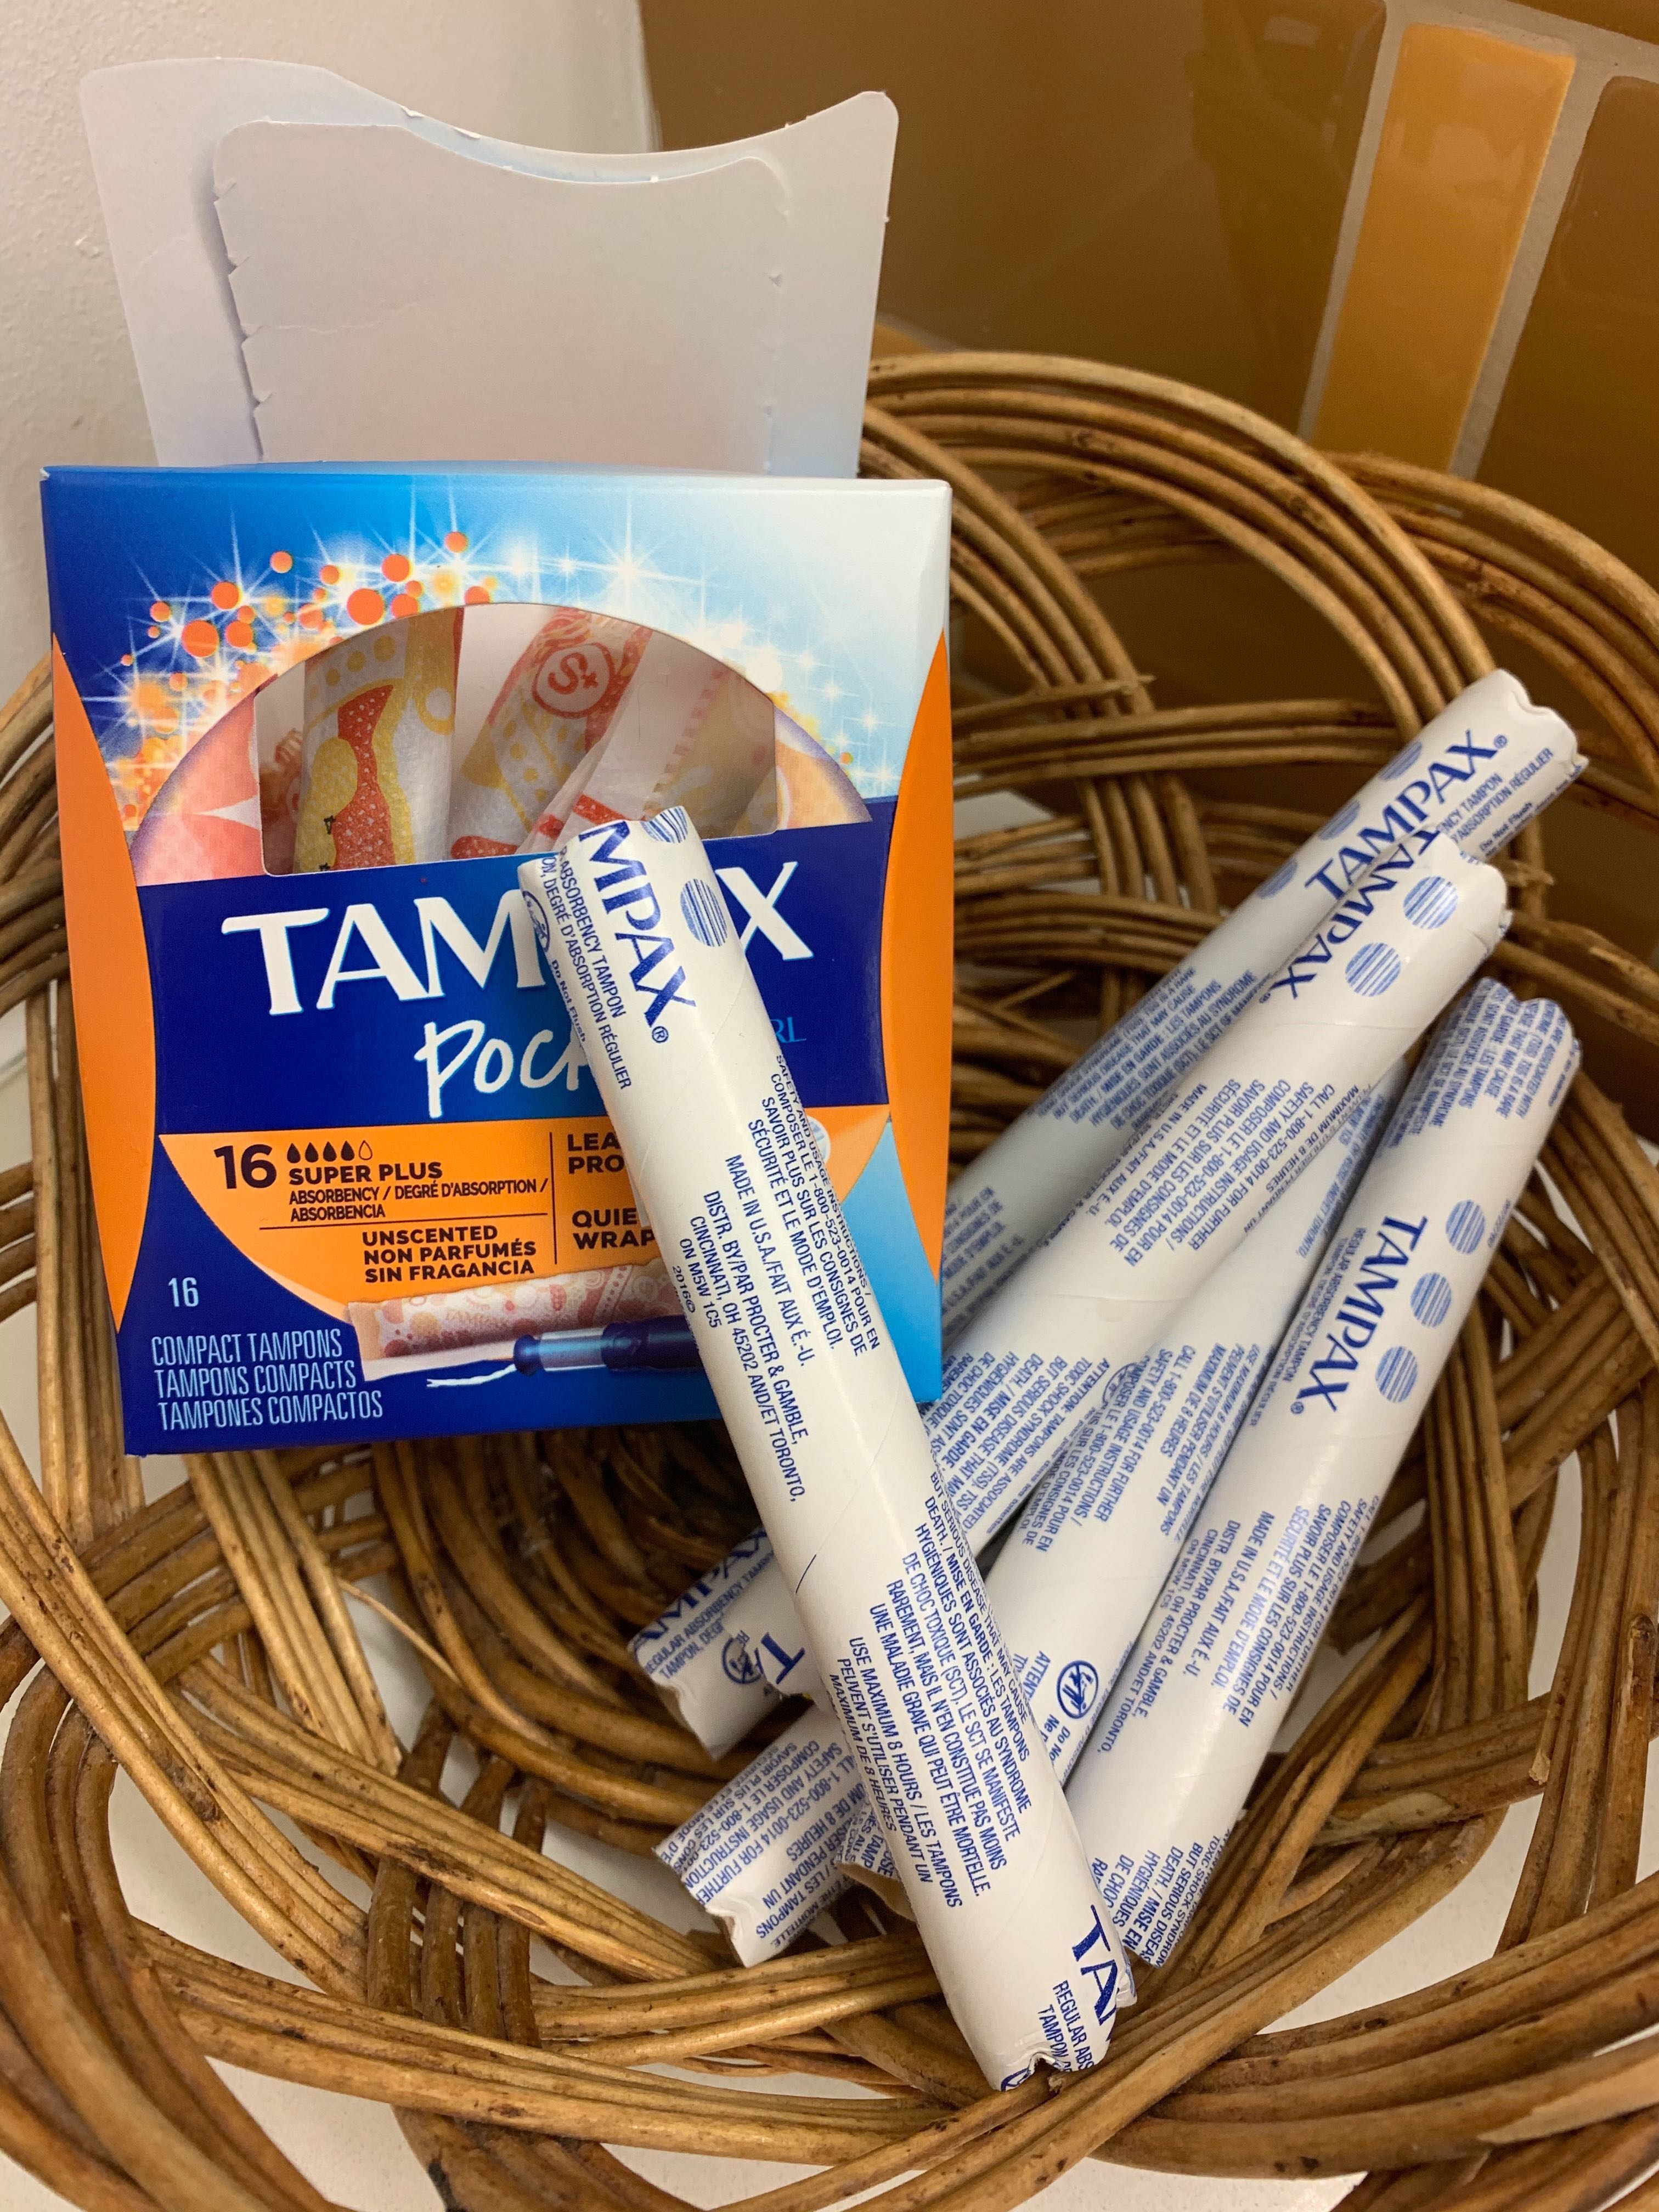 Tampax tampons in a basket at ASU